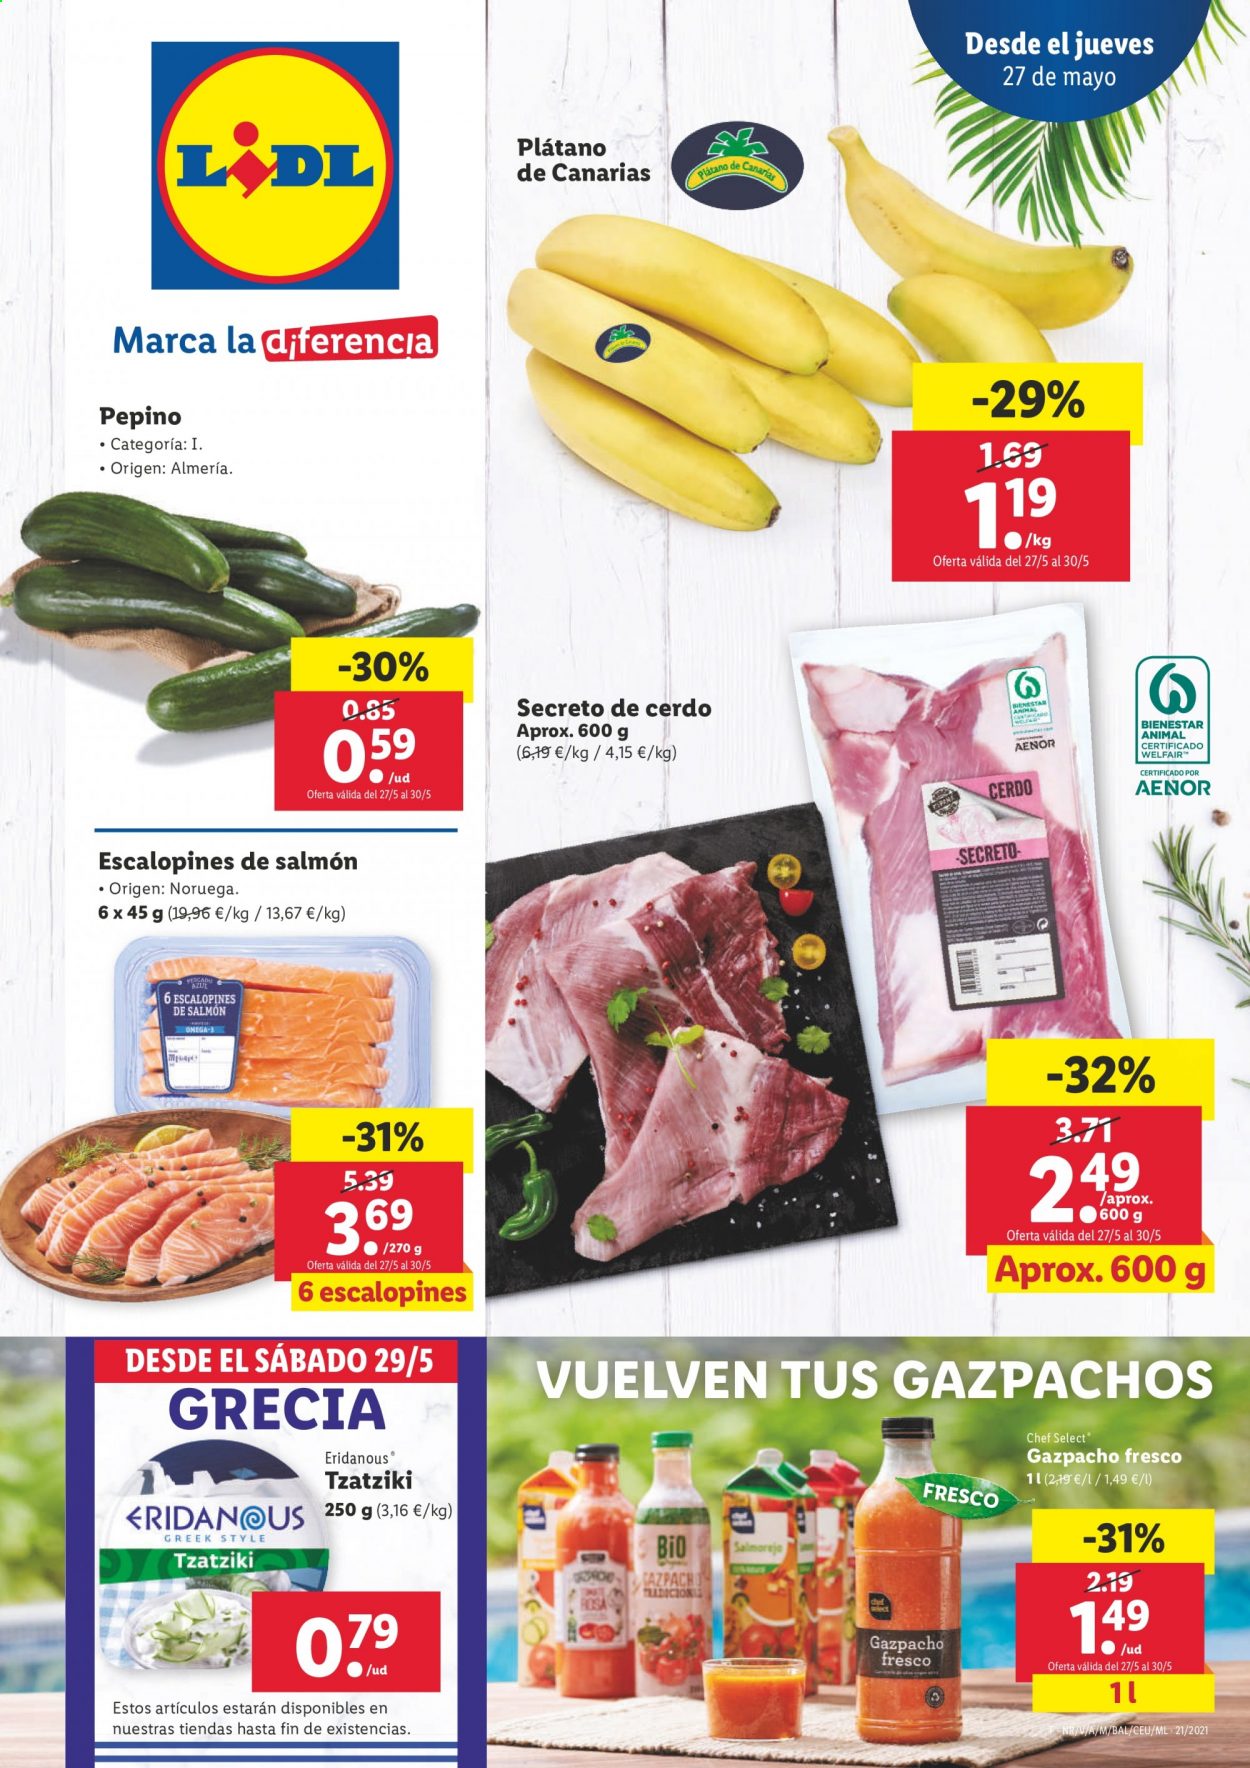 thumbnail - Folleto actual Lidl - 27/05/21 - 02/06/21 - Ventas - secreto de cerdo, plátano, pepino, salmón, tzatziki. Página 1.